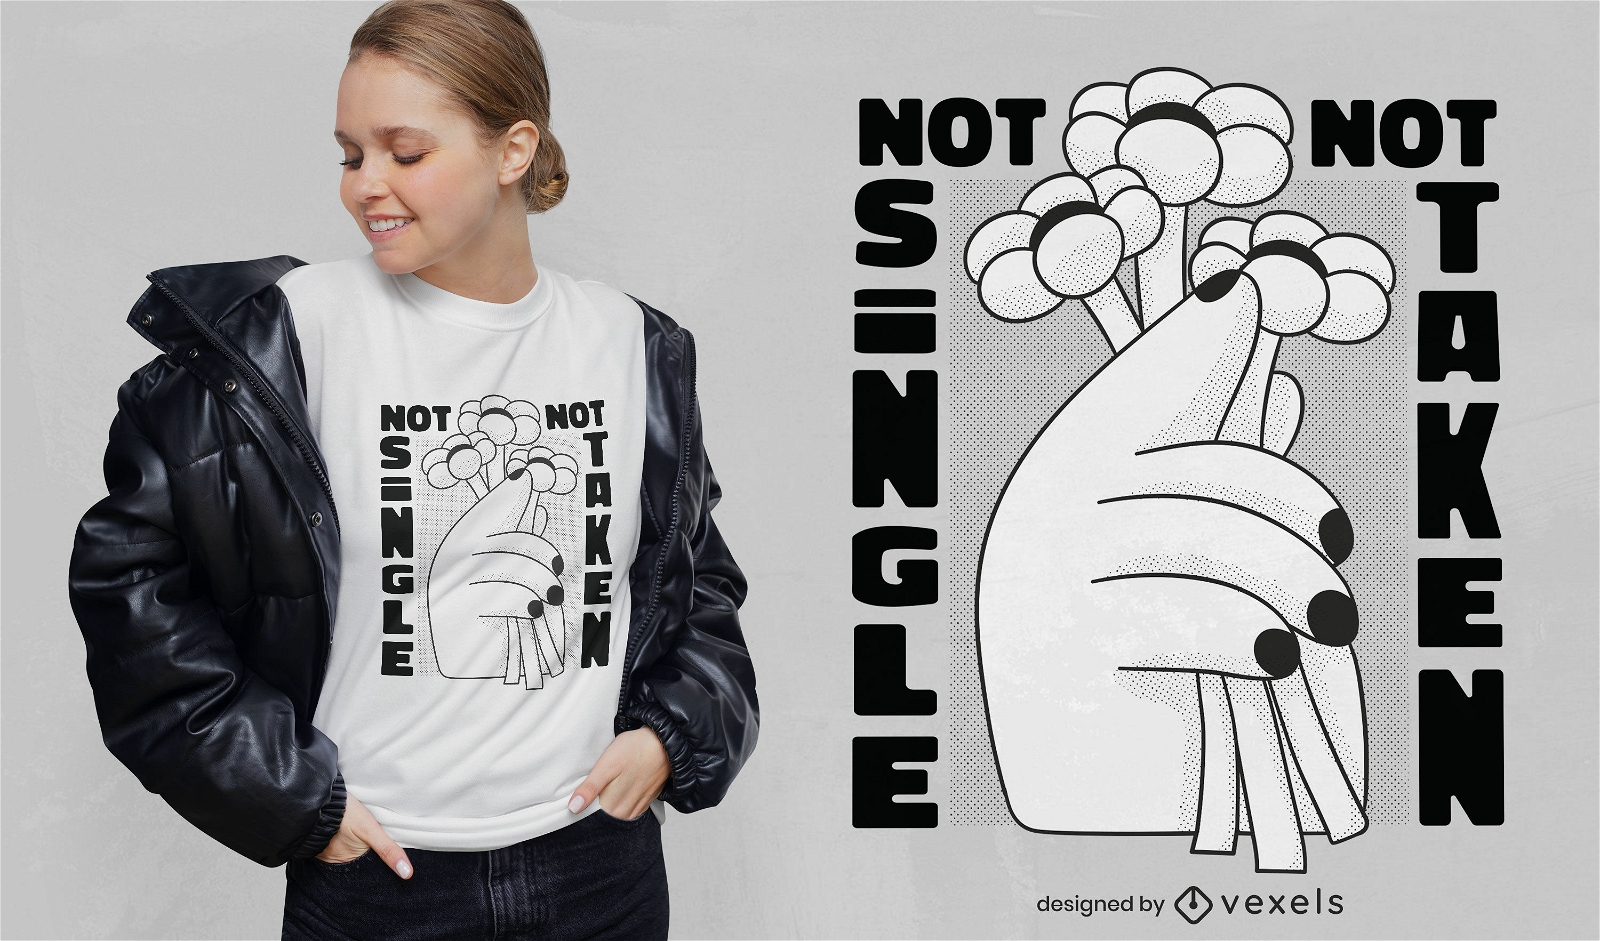 Not single not taken quote t-shirt design